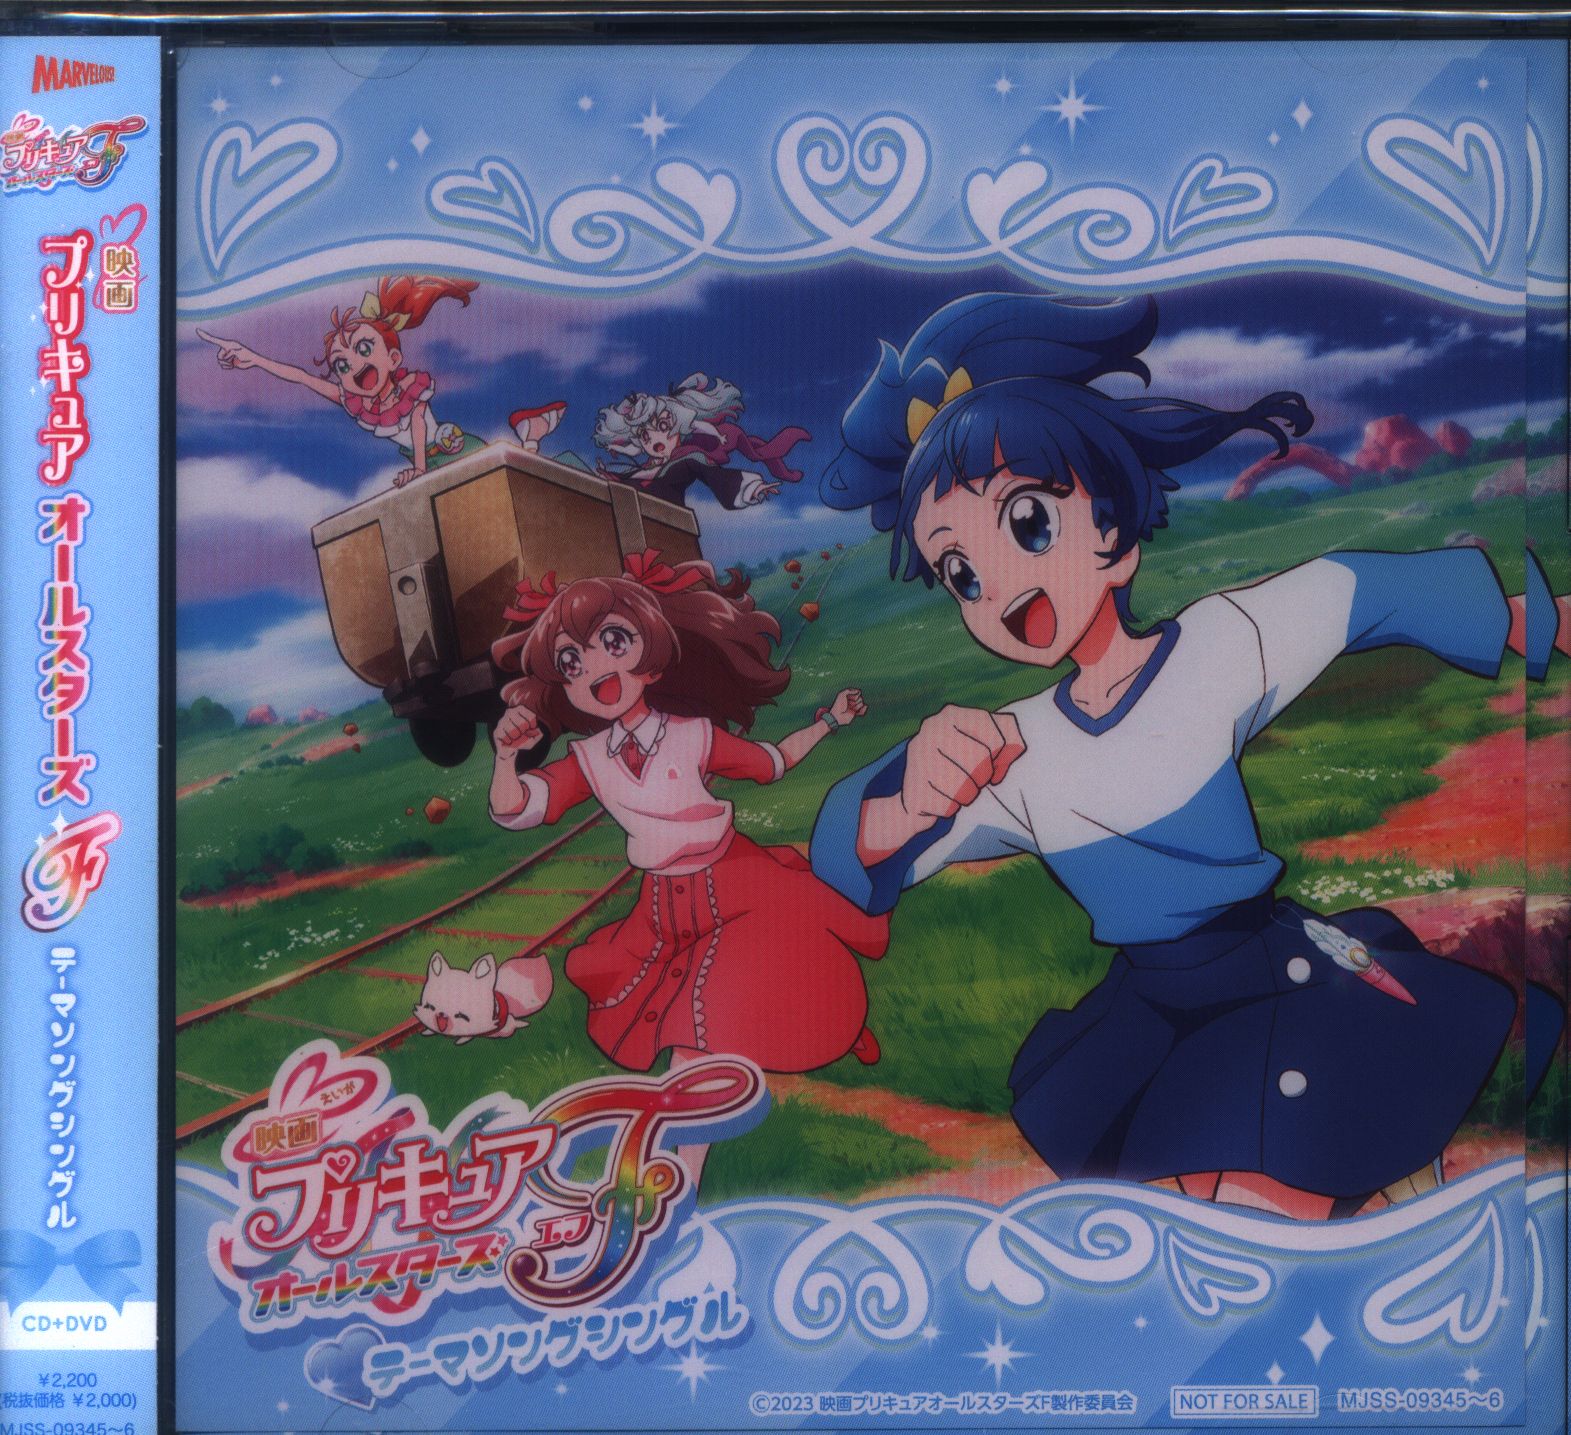 PreCure All Stars F Original Soundtrack JAPAN CD